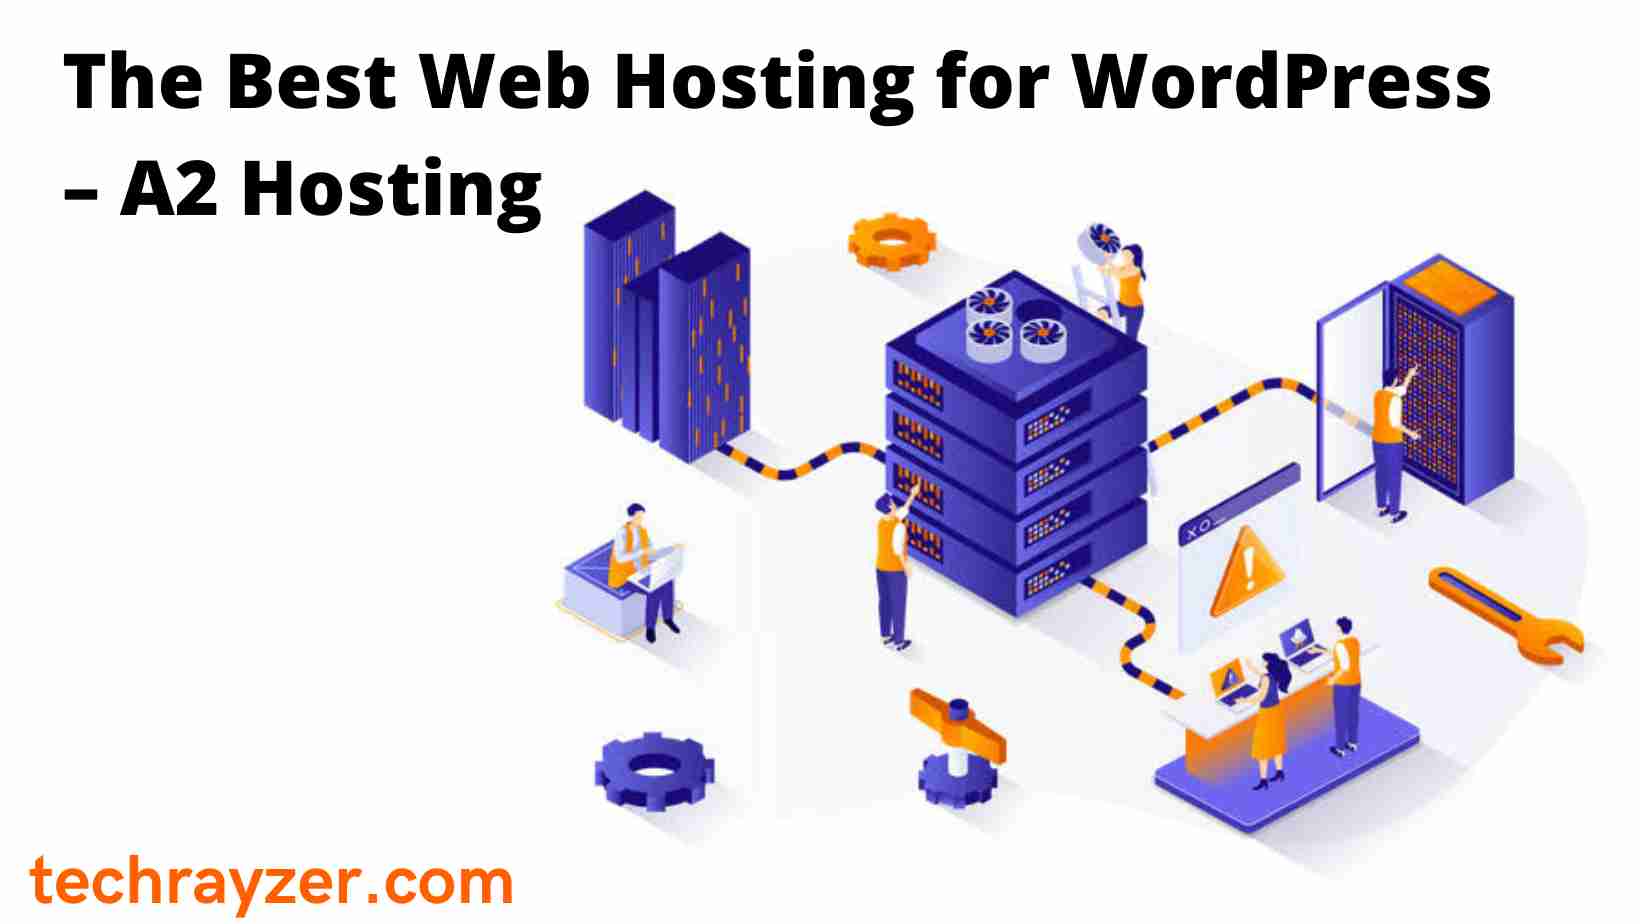 The Best Web Hosting for WordPress, A2 Hosting